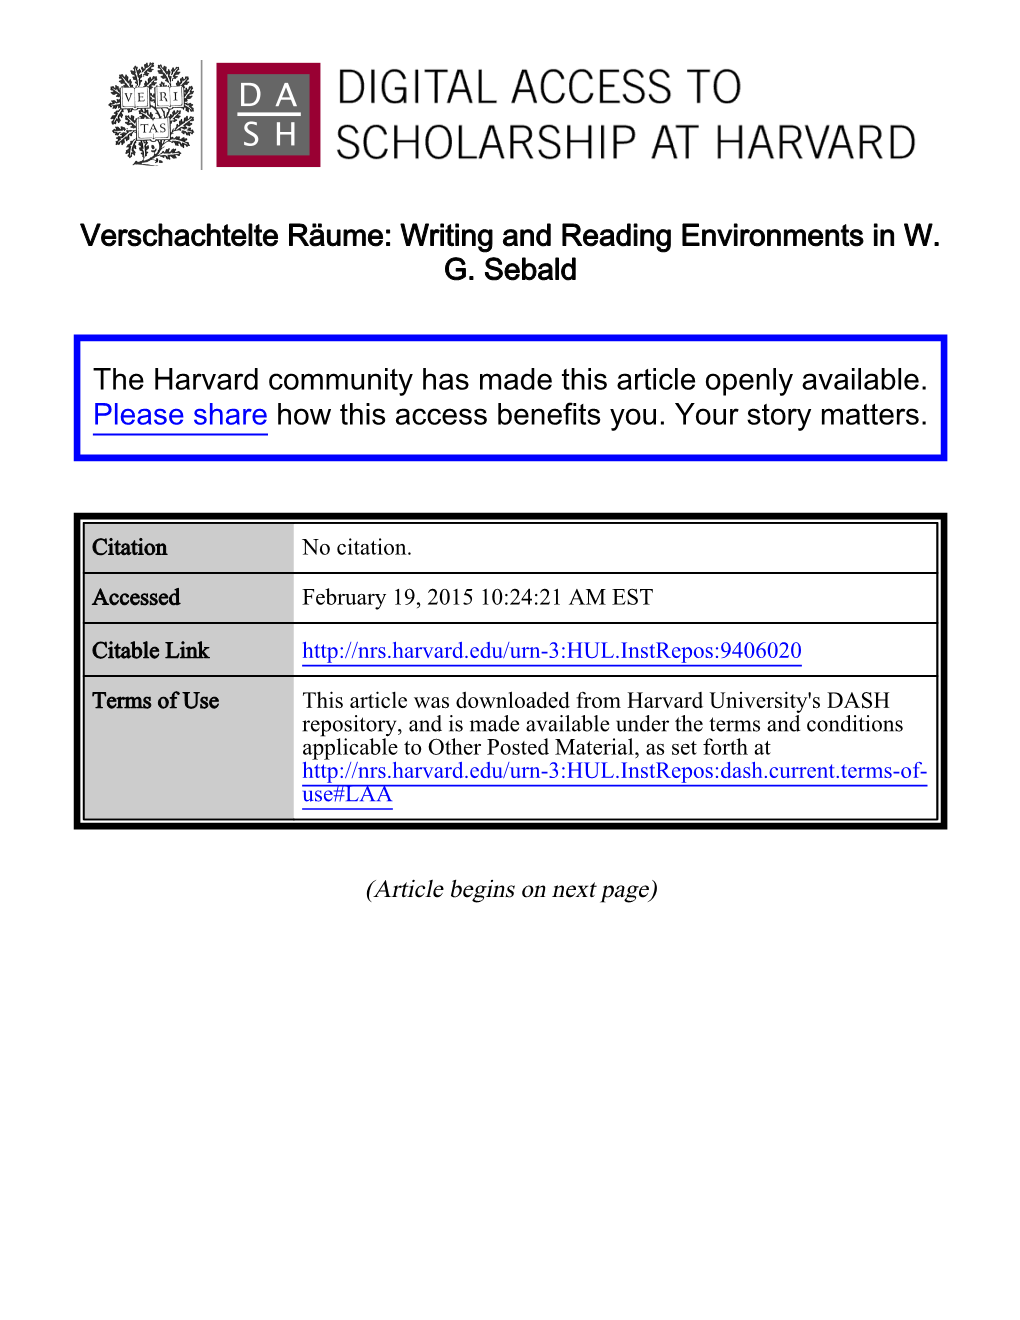 Writing and Reading Environments in WG Sebald the Harvard